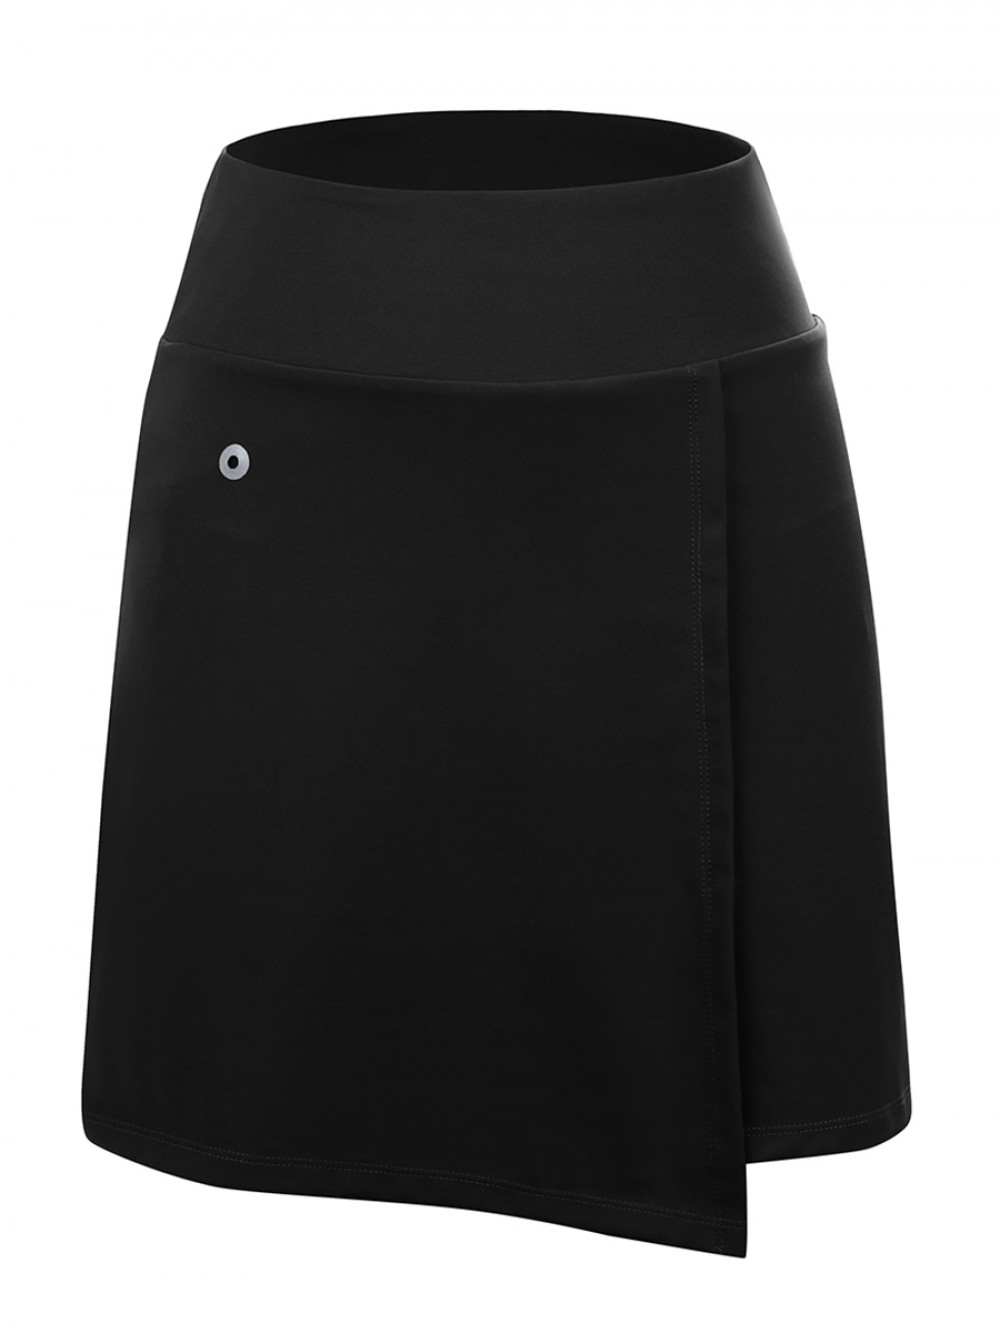 Elegant Black High Waist Tennis Skirt With Pocket Sportswear